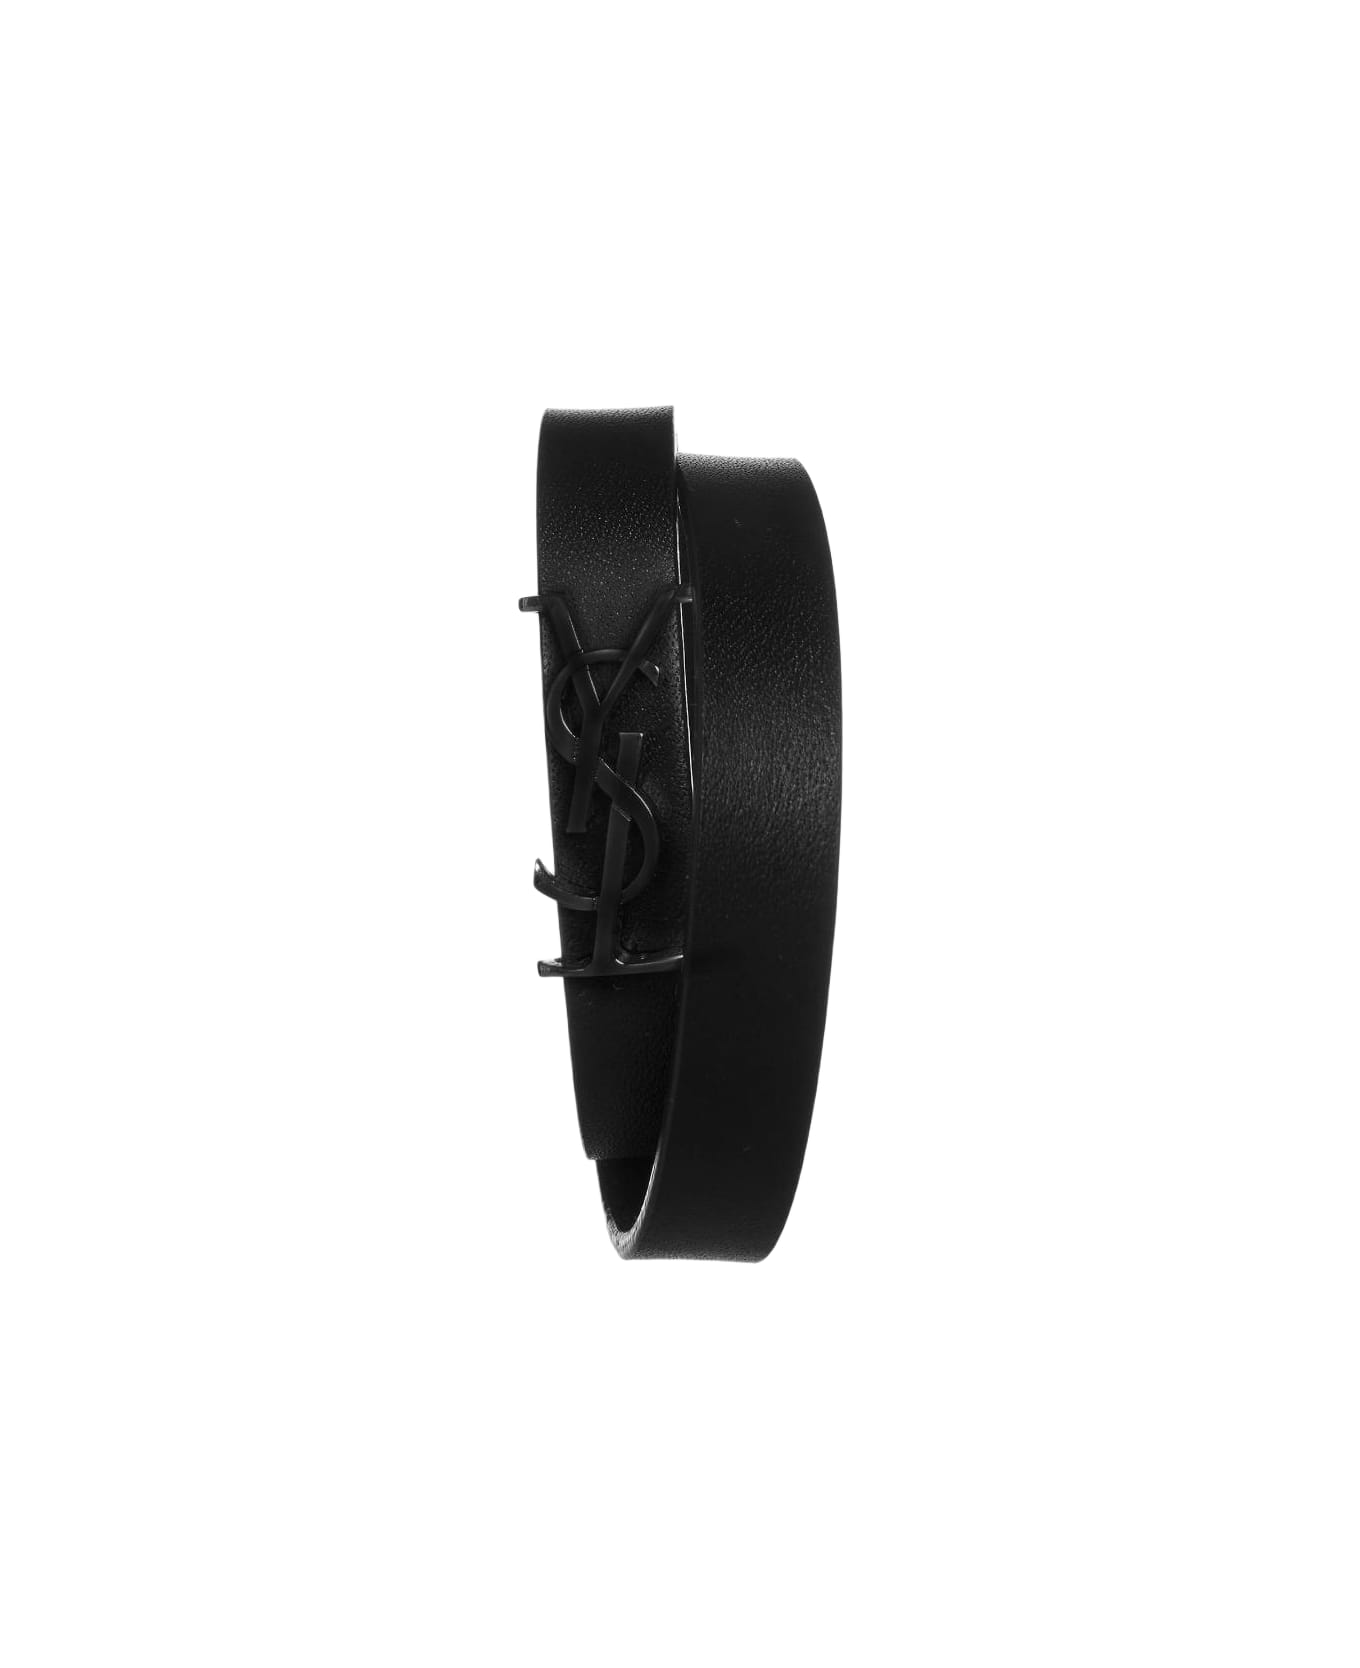 Saint Laurent Opyum Ysl Logo Leather Bracelet - BLACK